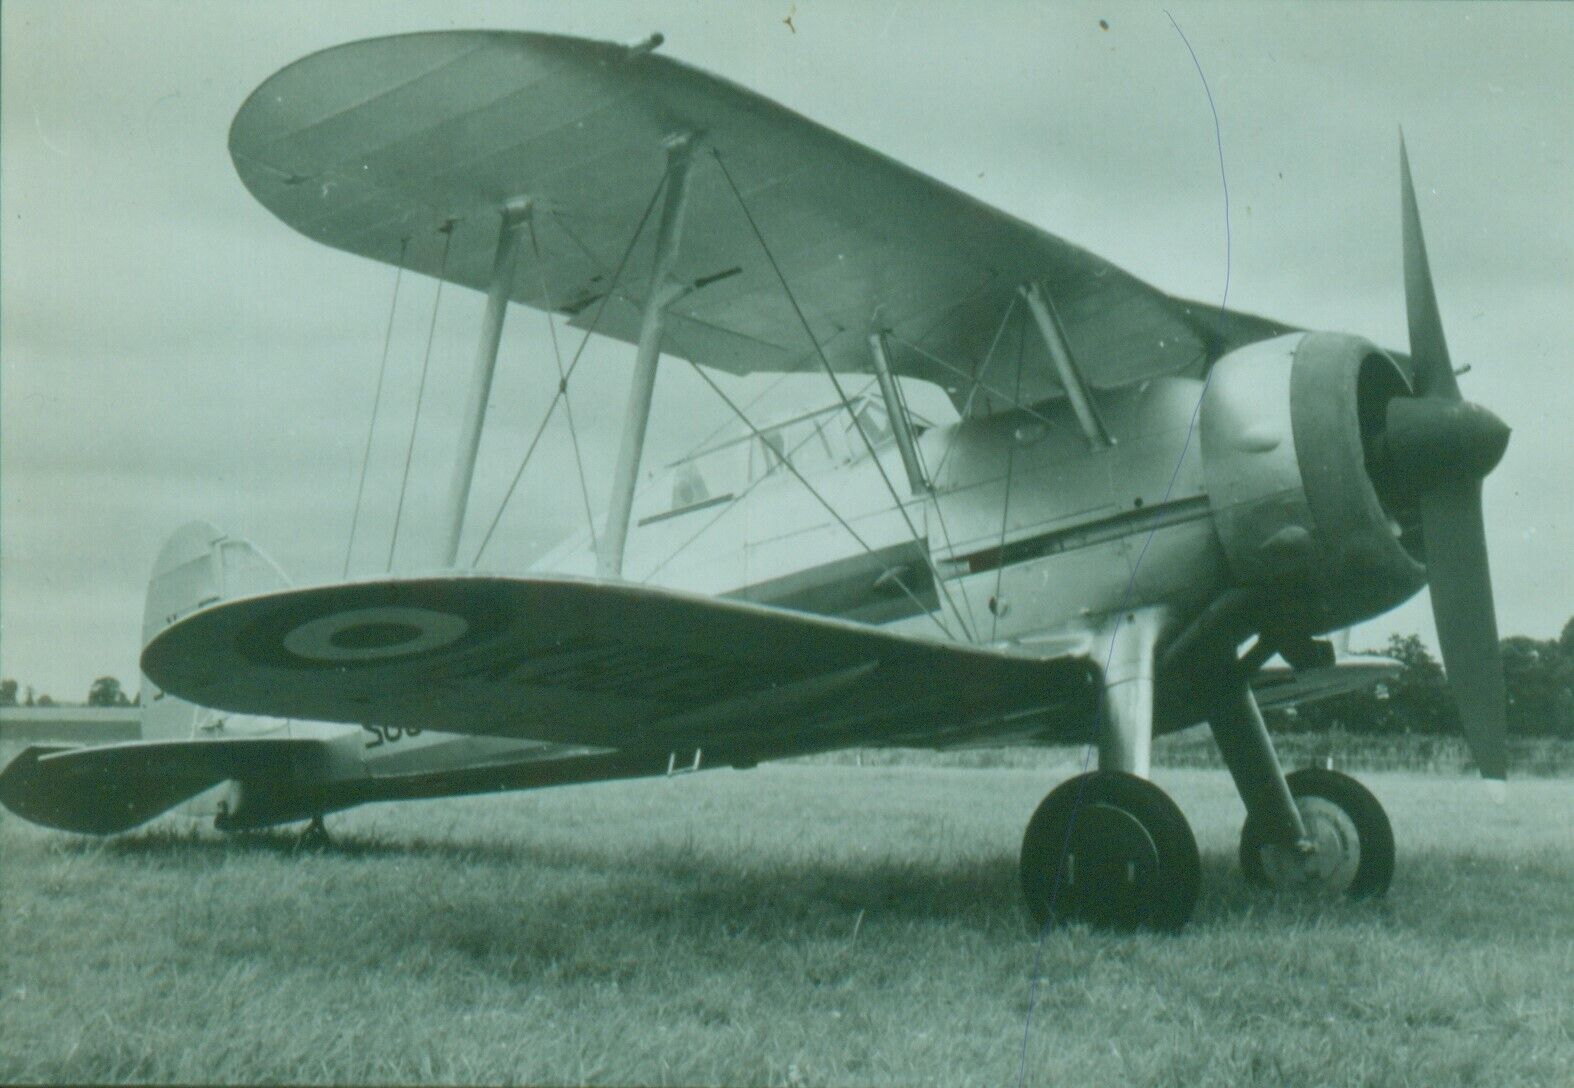 MILITARY AIRCRAFT PLANE COLOUR SLIDE OF AN RAF GLOSTER GLADIATOR BI-PLANE.